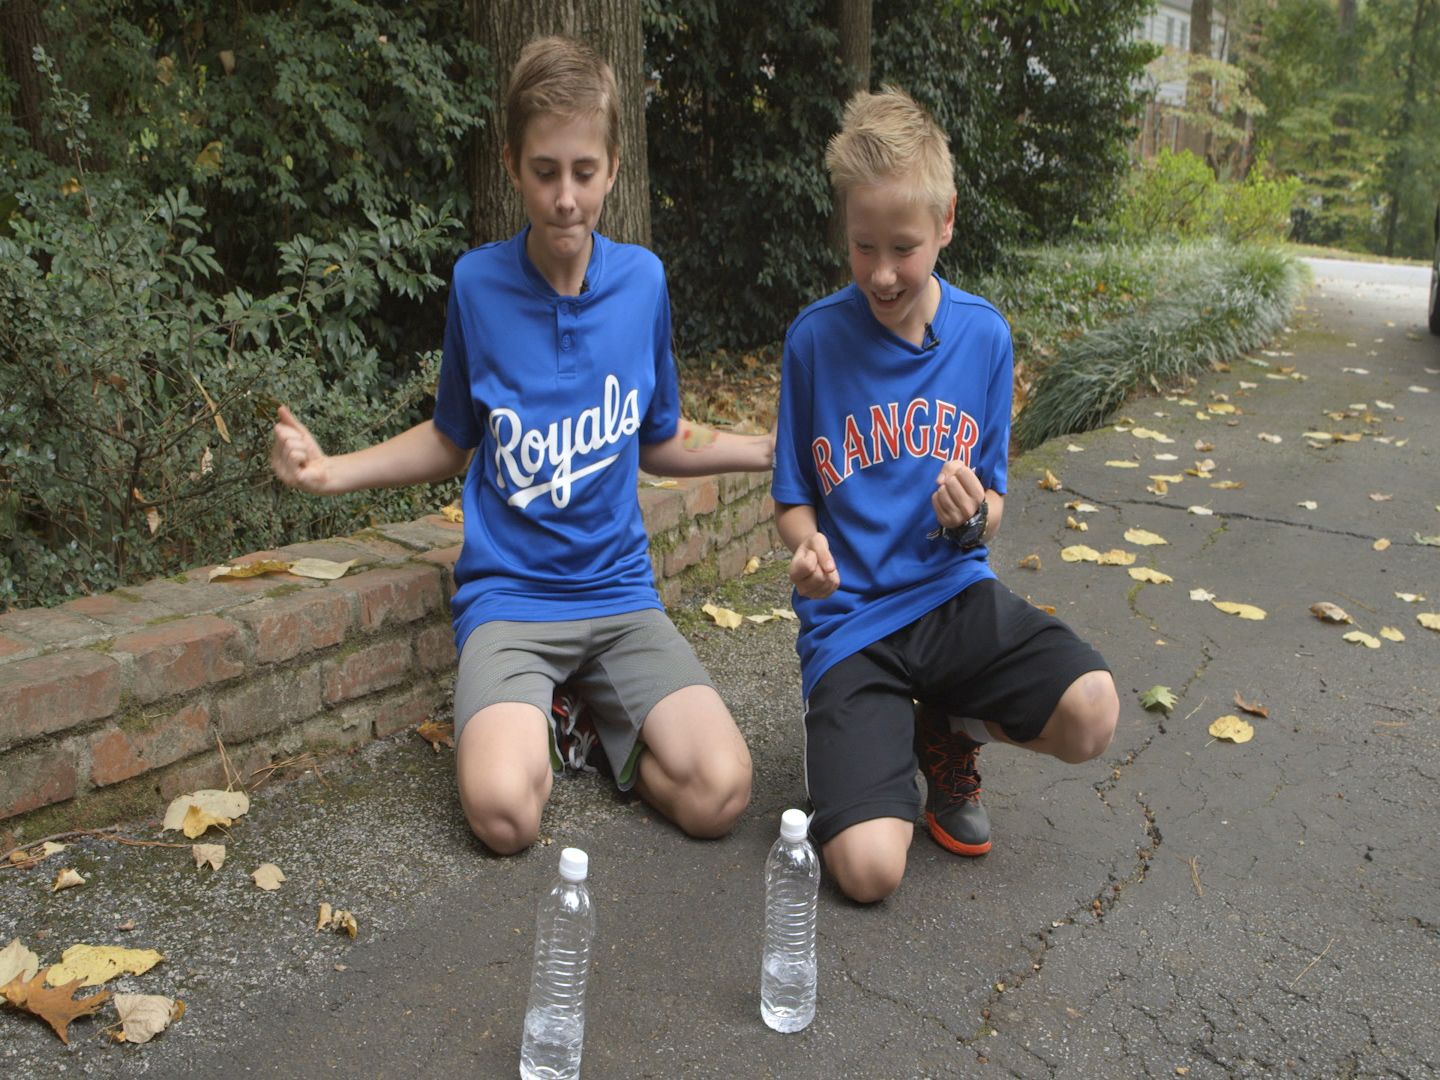 Schools Dampen Enthusiasm for Water-Bottle Flipping Craze - WSJ